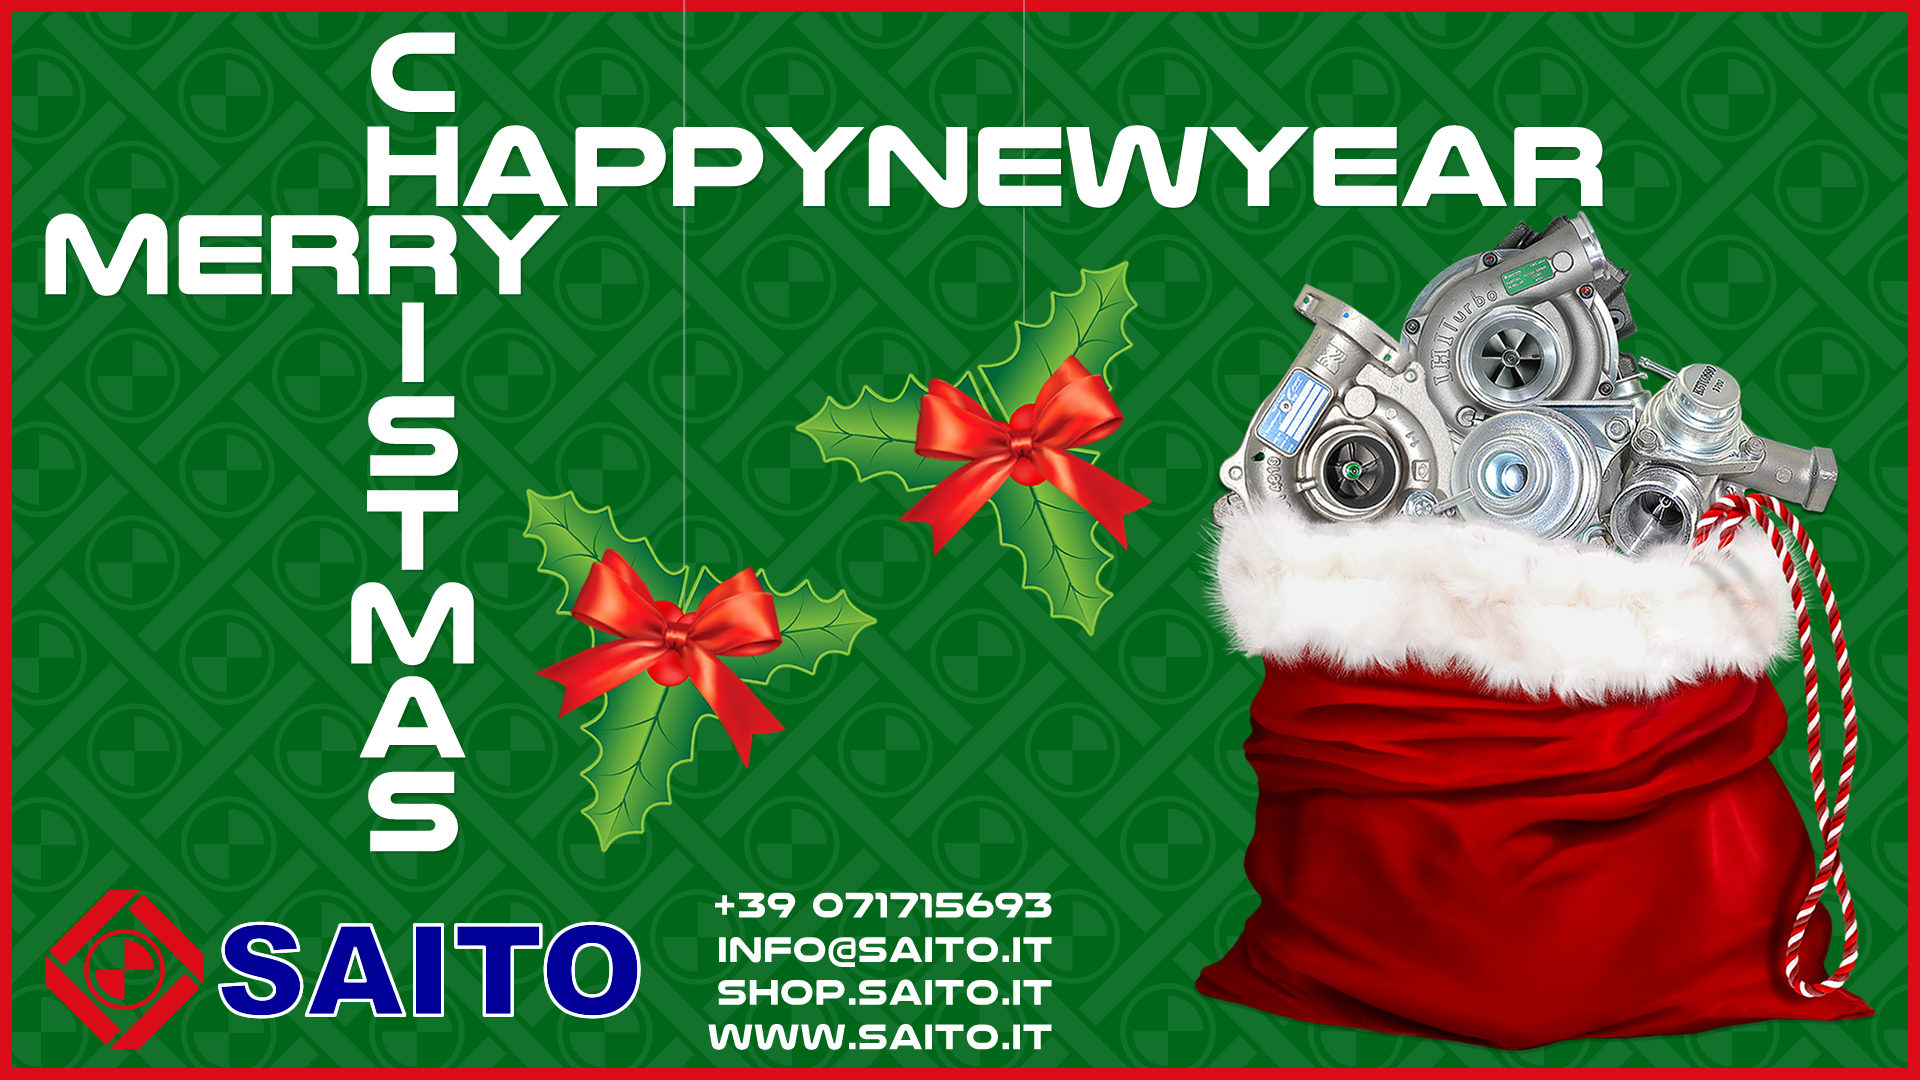 Merry Christmas and Happy New Year | SAITO